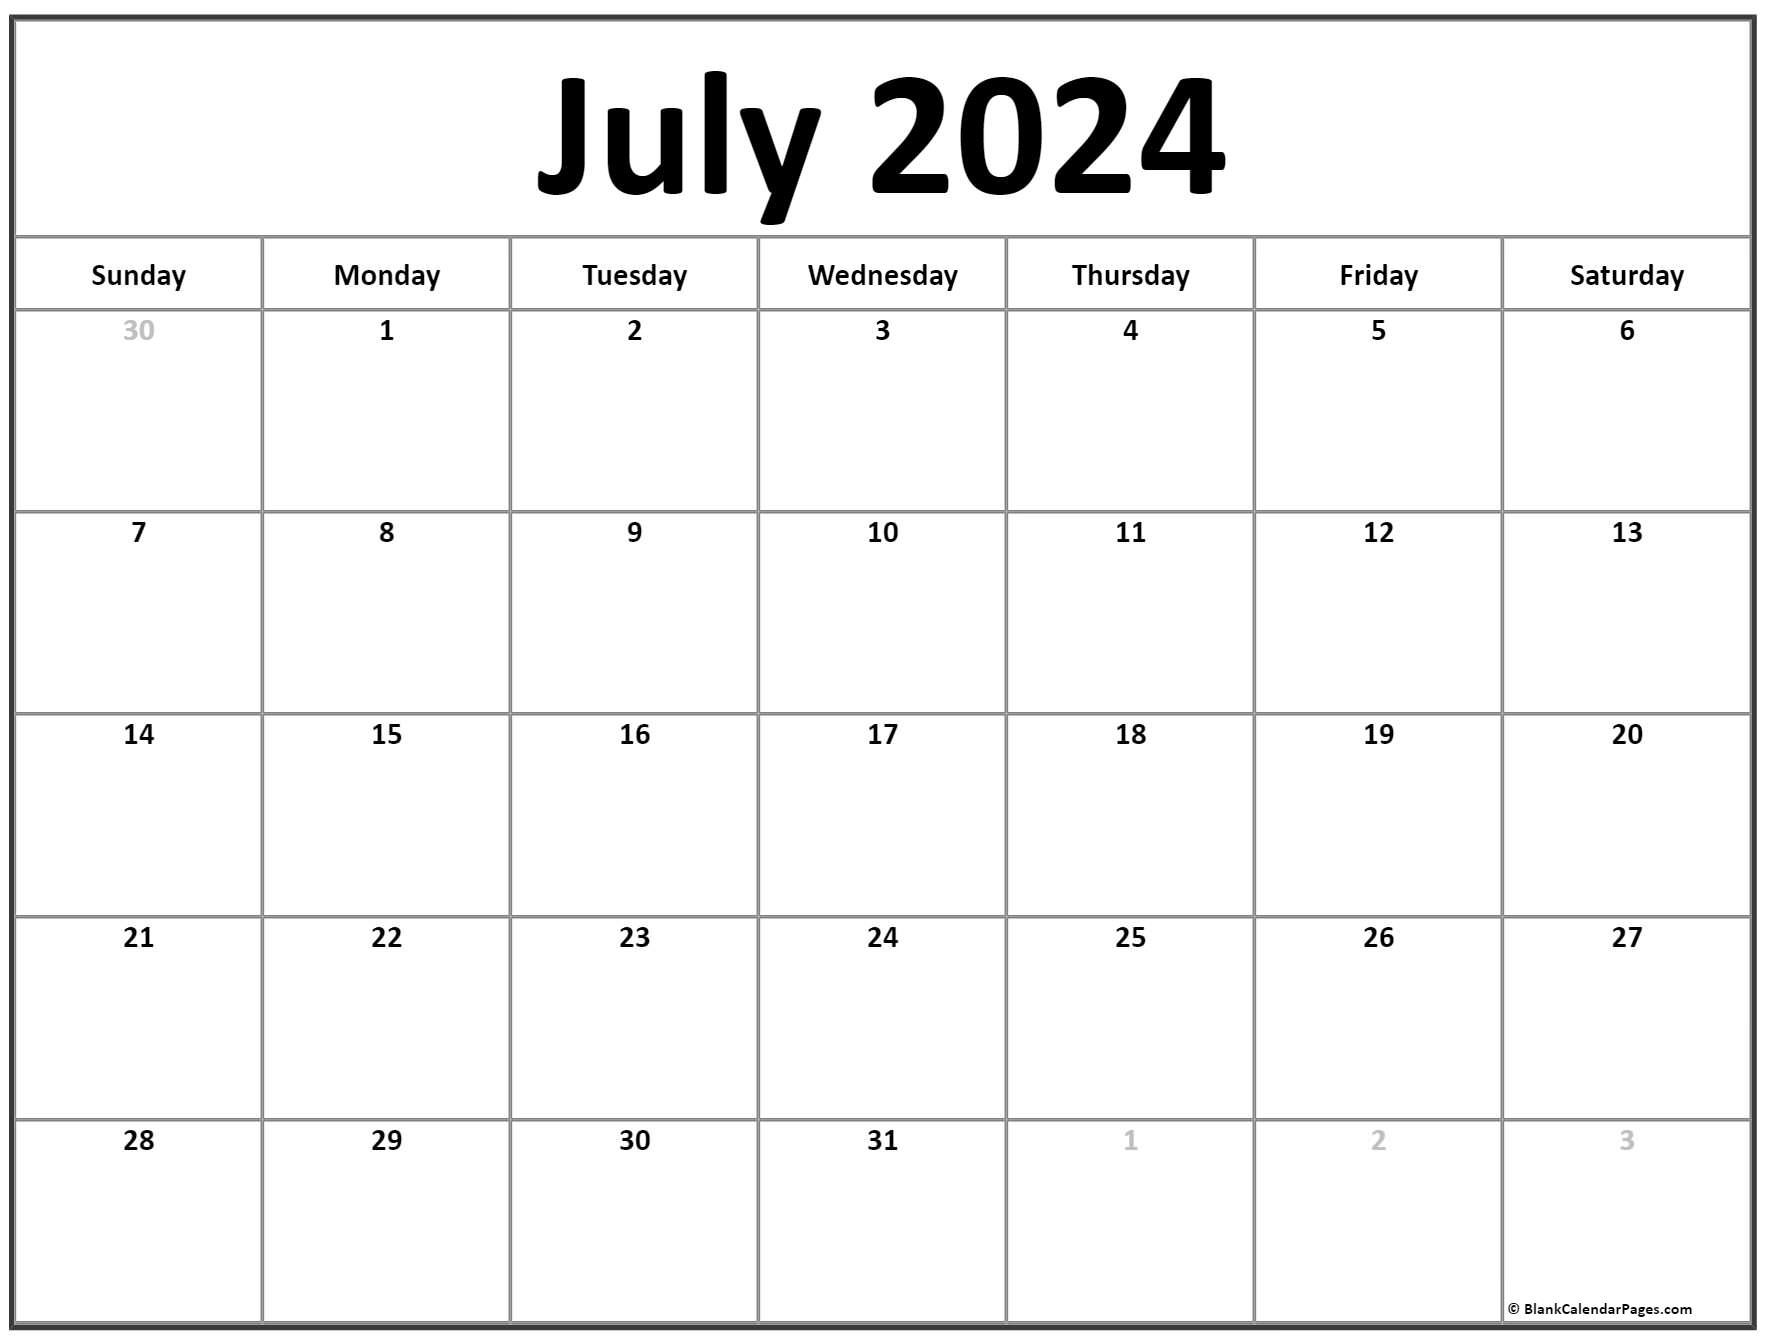 July 2020 calendar | free printable monthly calendars